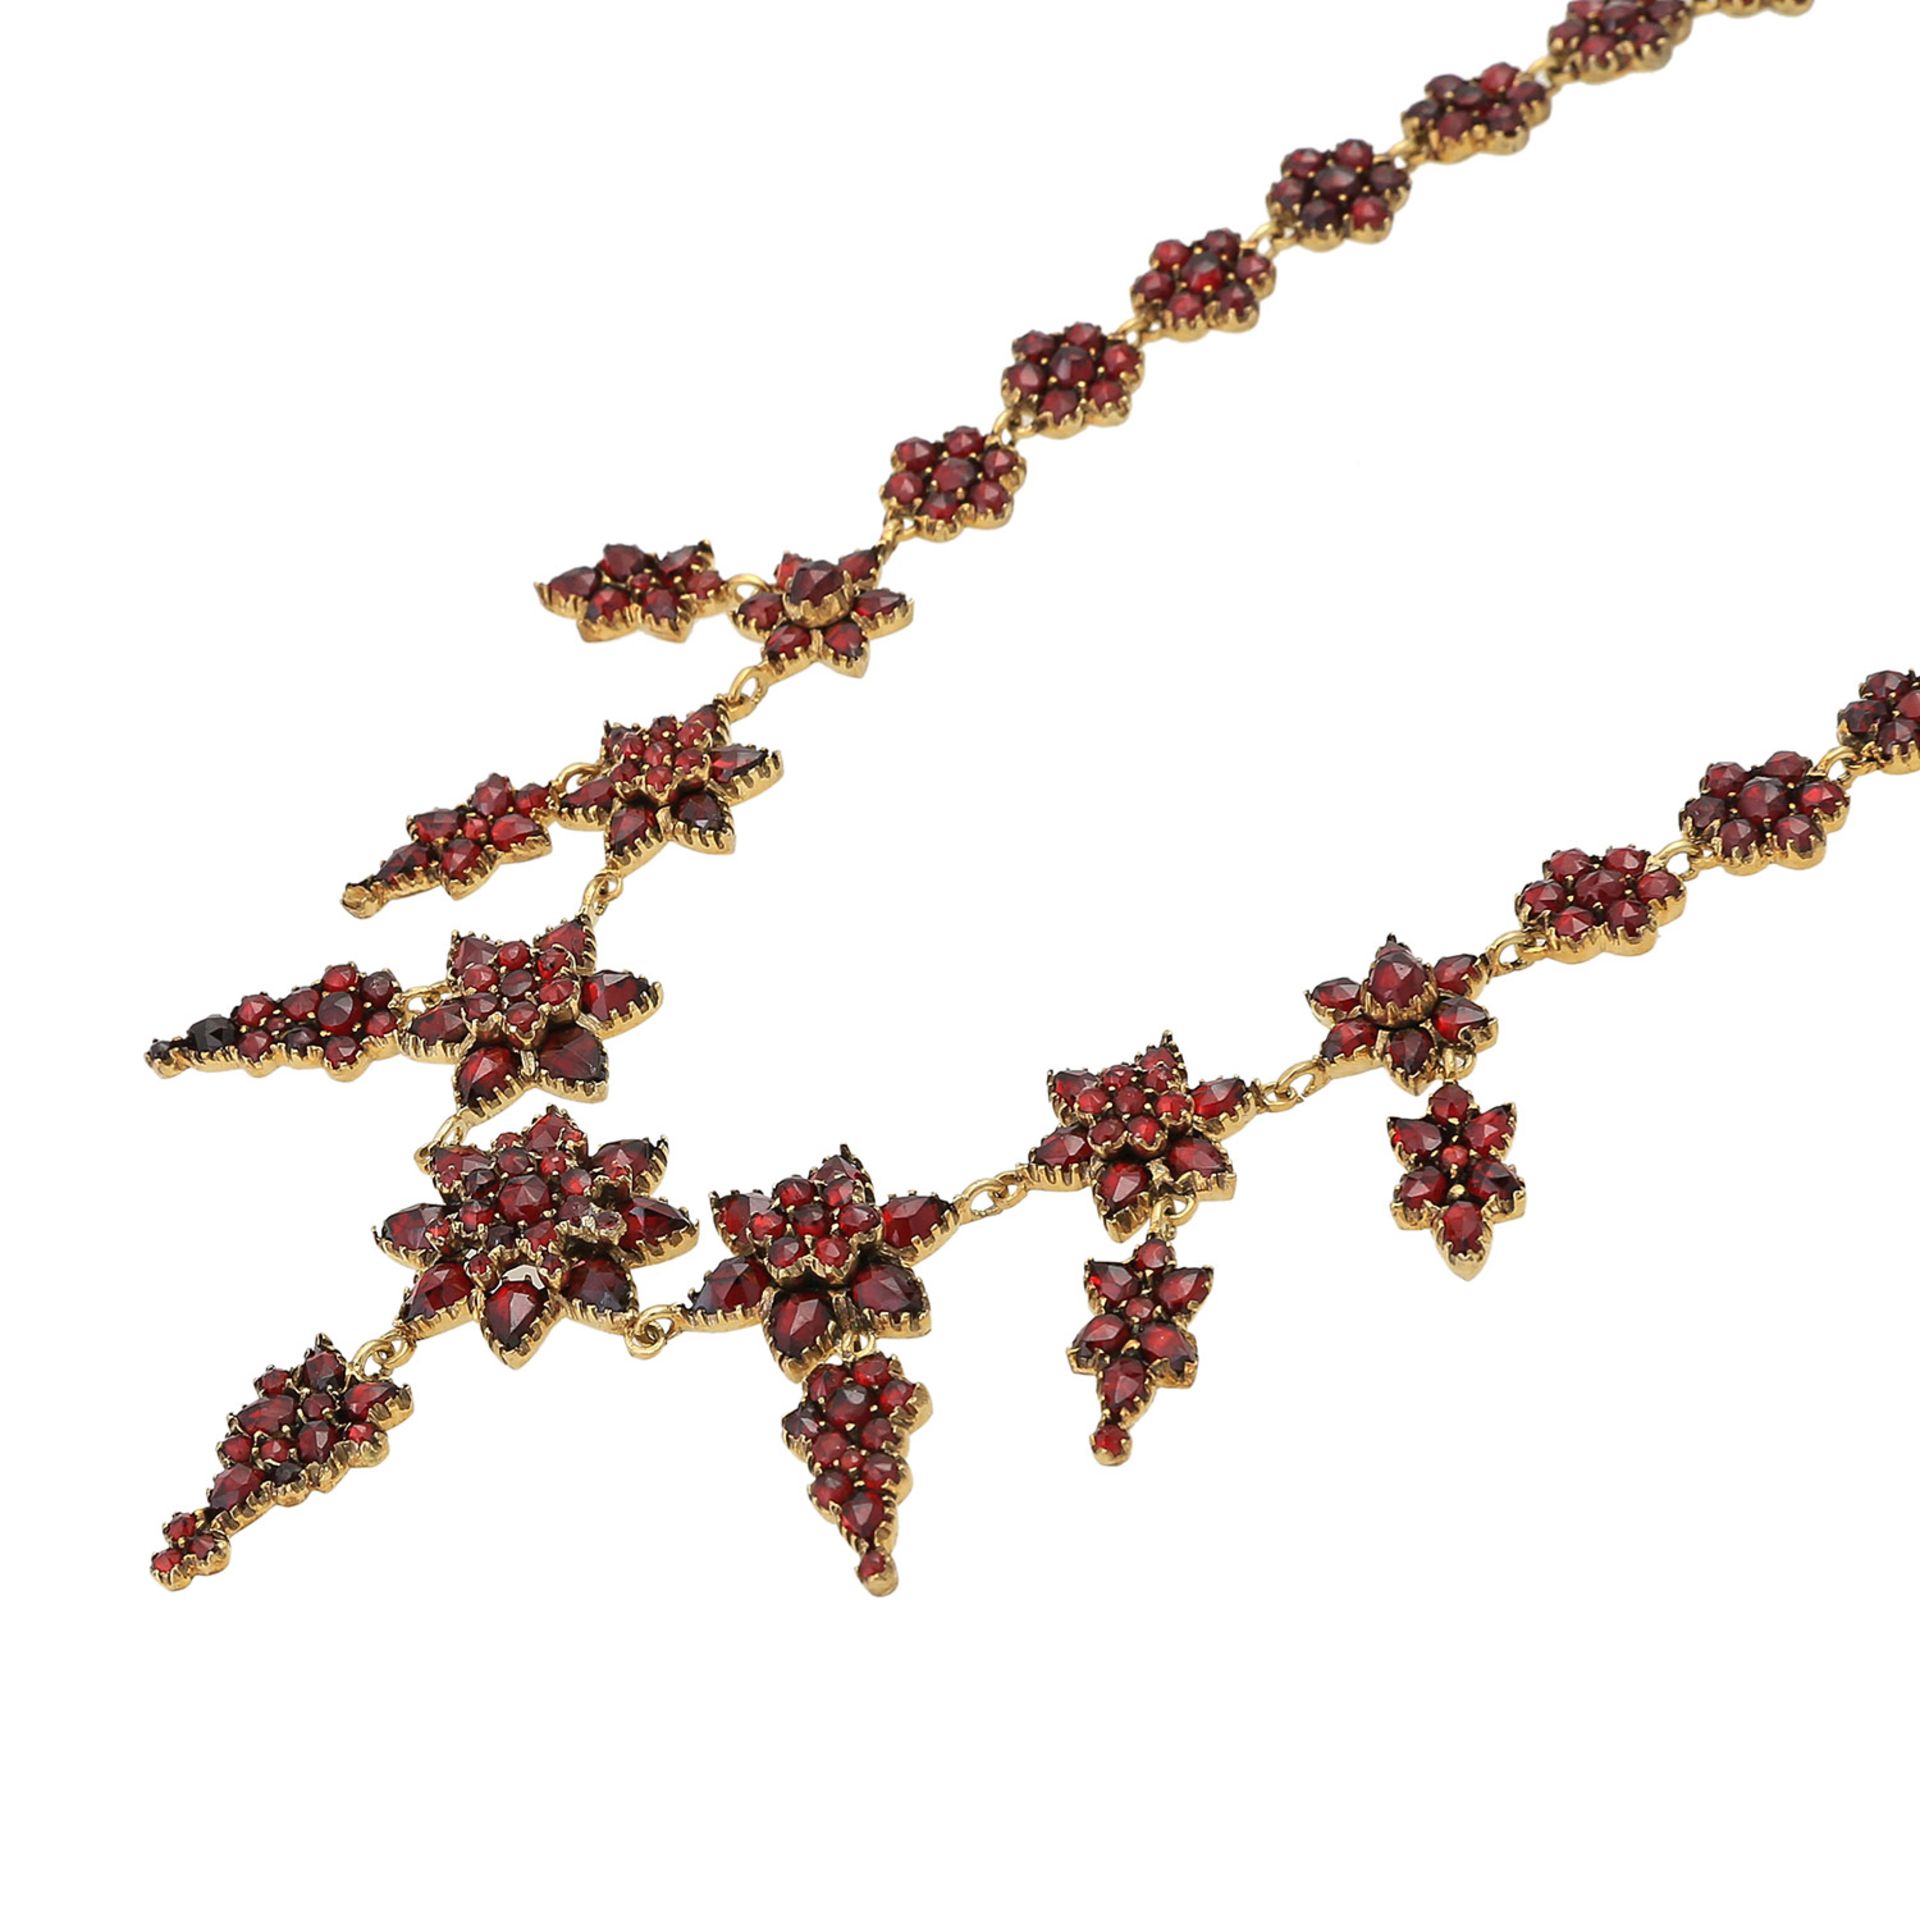 Collier bes. mit Granat, um 1900,Metall vergoldet, Blütenrosetten, vorne sternförmig im - Image 4 of 4